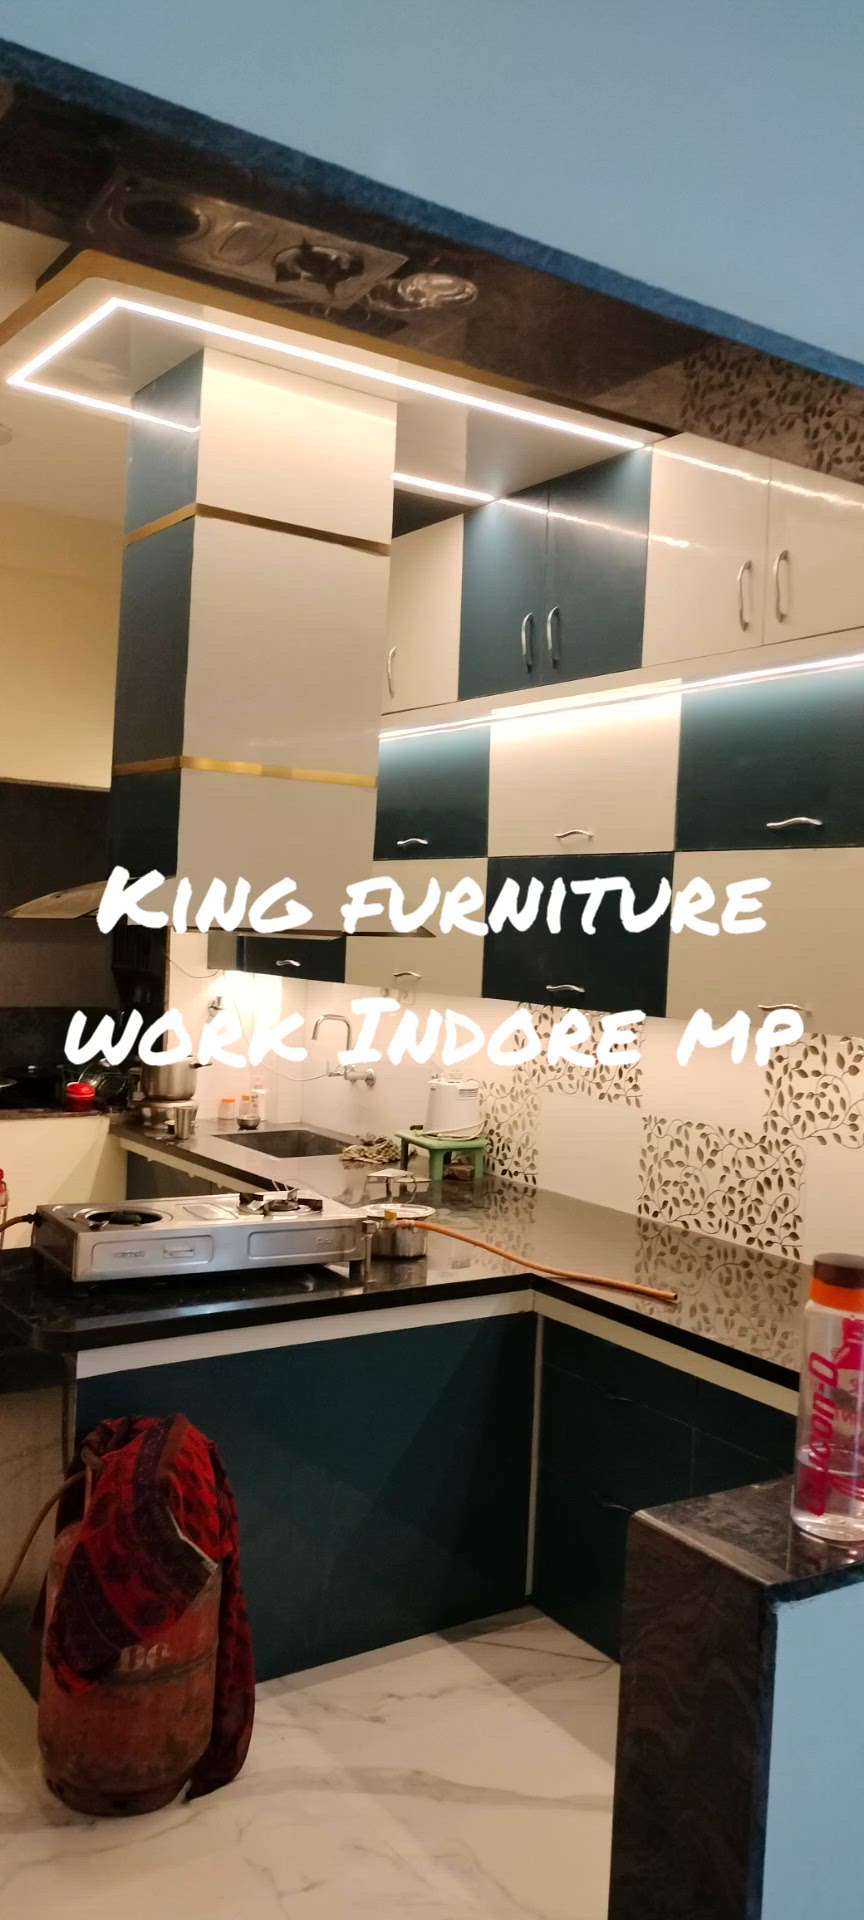 King furniture work Indore mp...